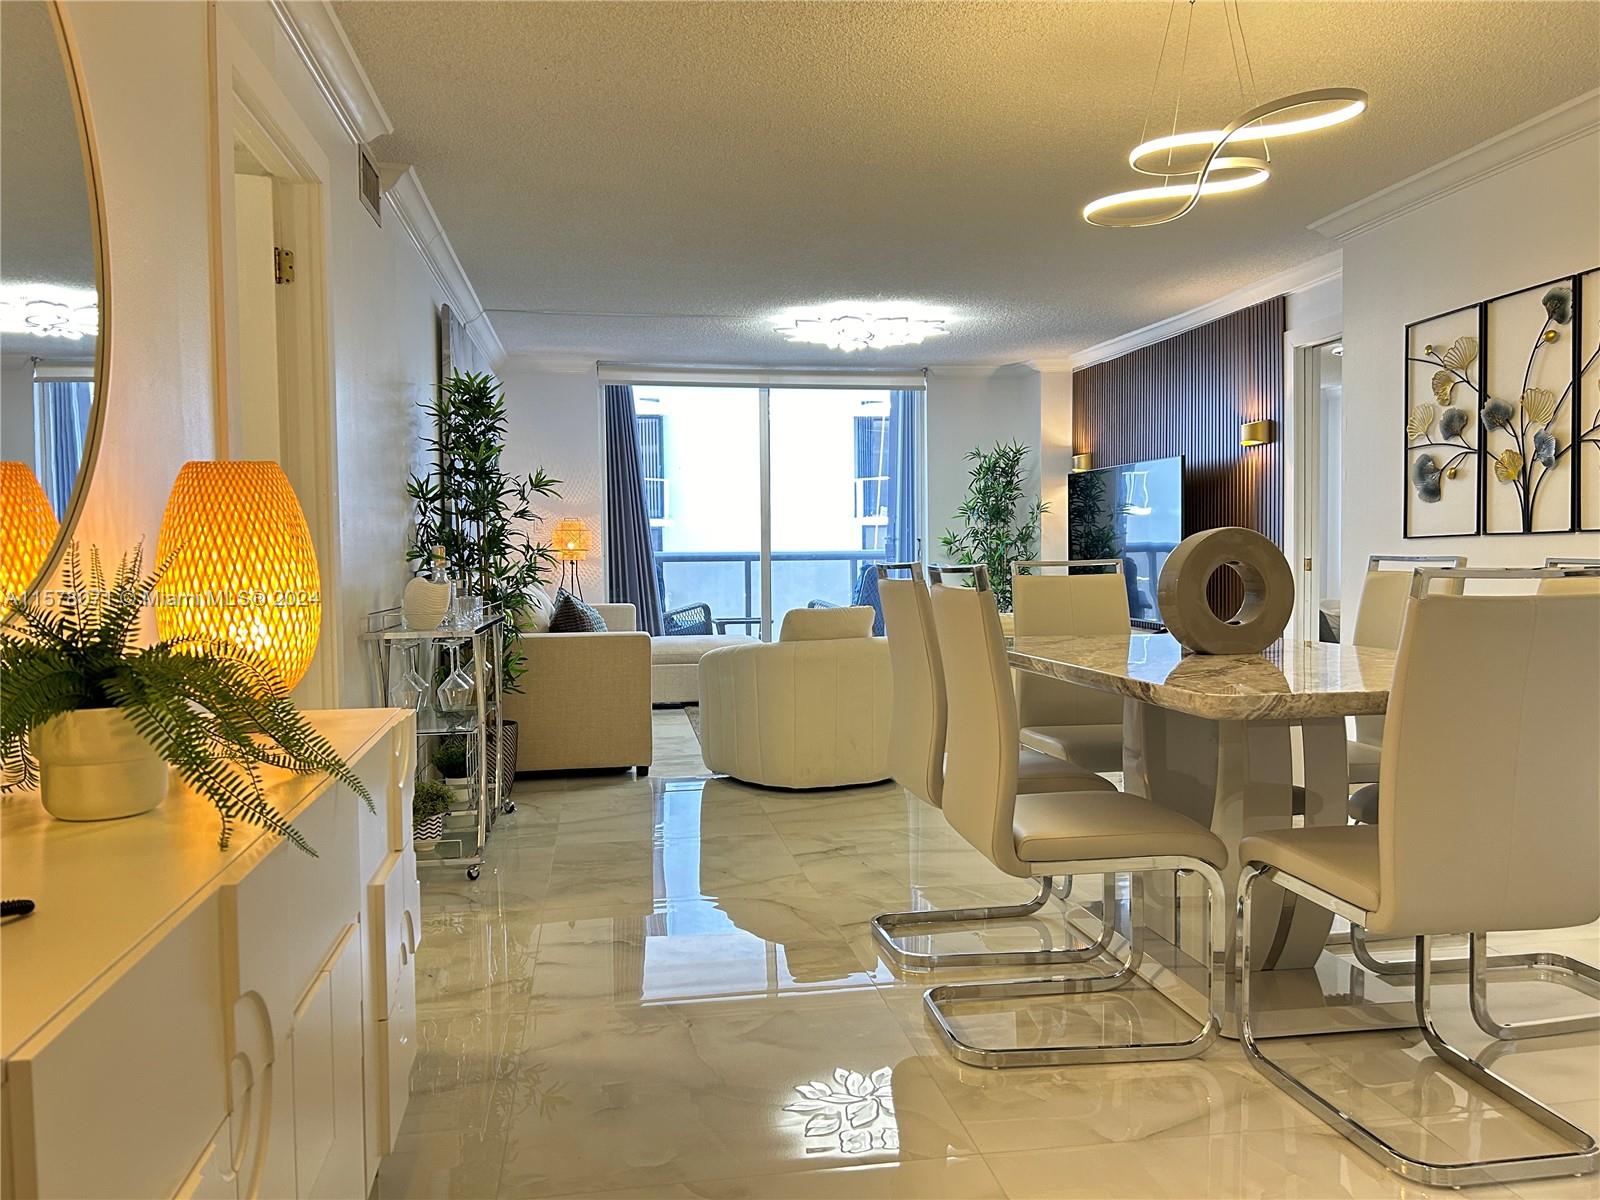 Rental Property at 6039 Collins Ave 1507, Miami Beach, Miami-Dade County, Florida - Bedrooms: 2 
Bathrooms: 2  - $3,650 MO.